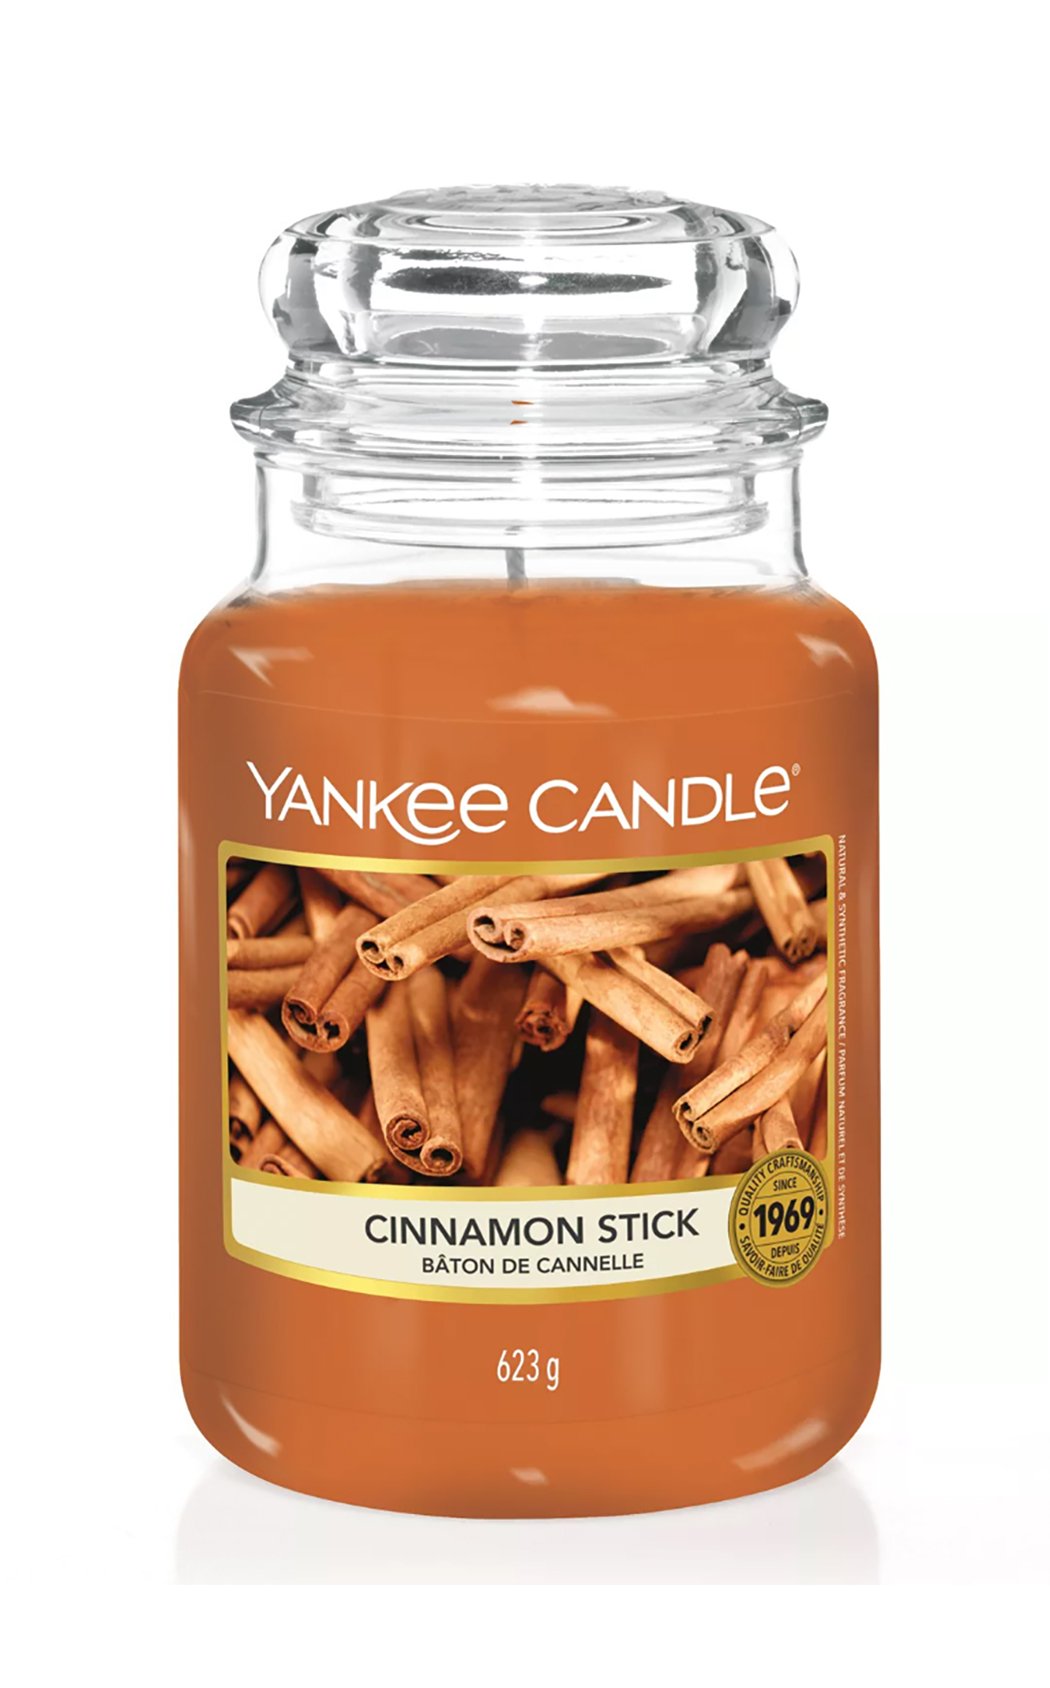 Yankee Candle Cinnamon Stick Large Jar Candle